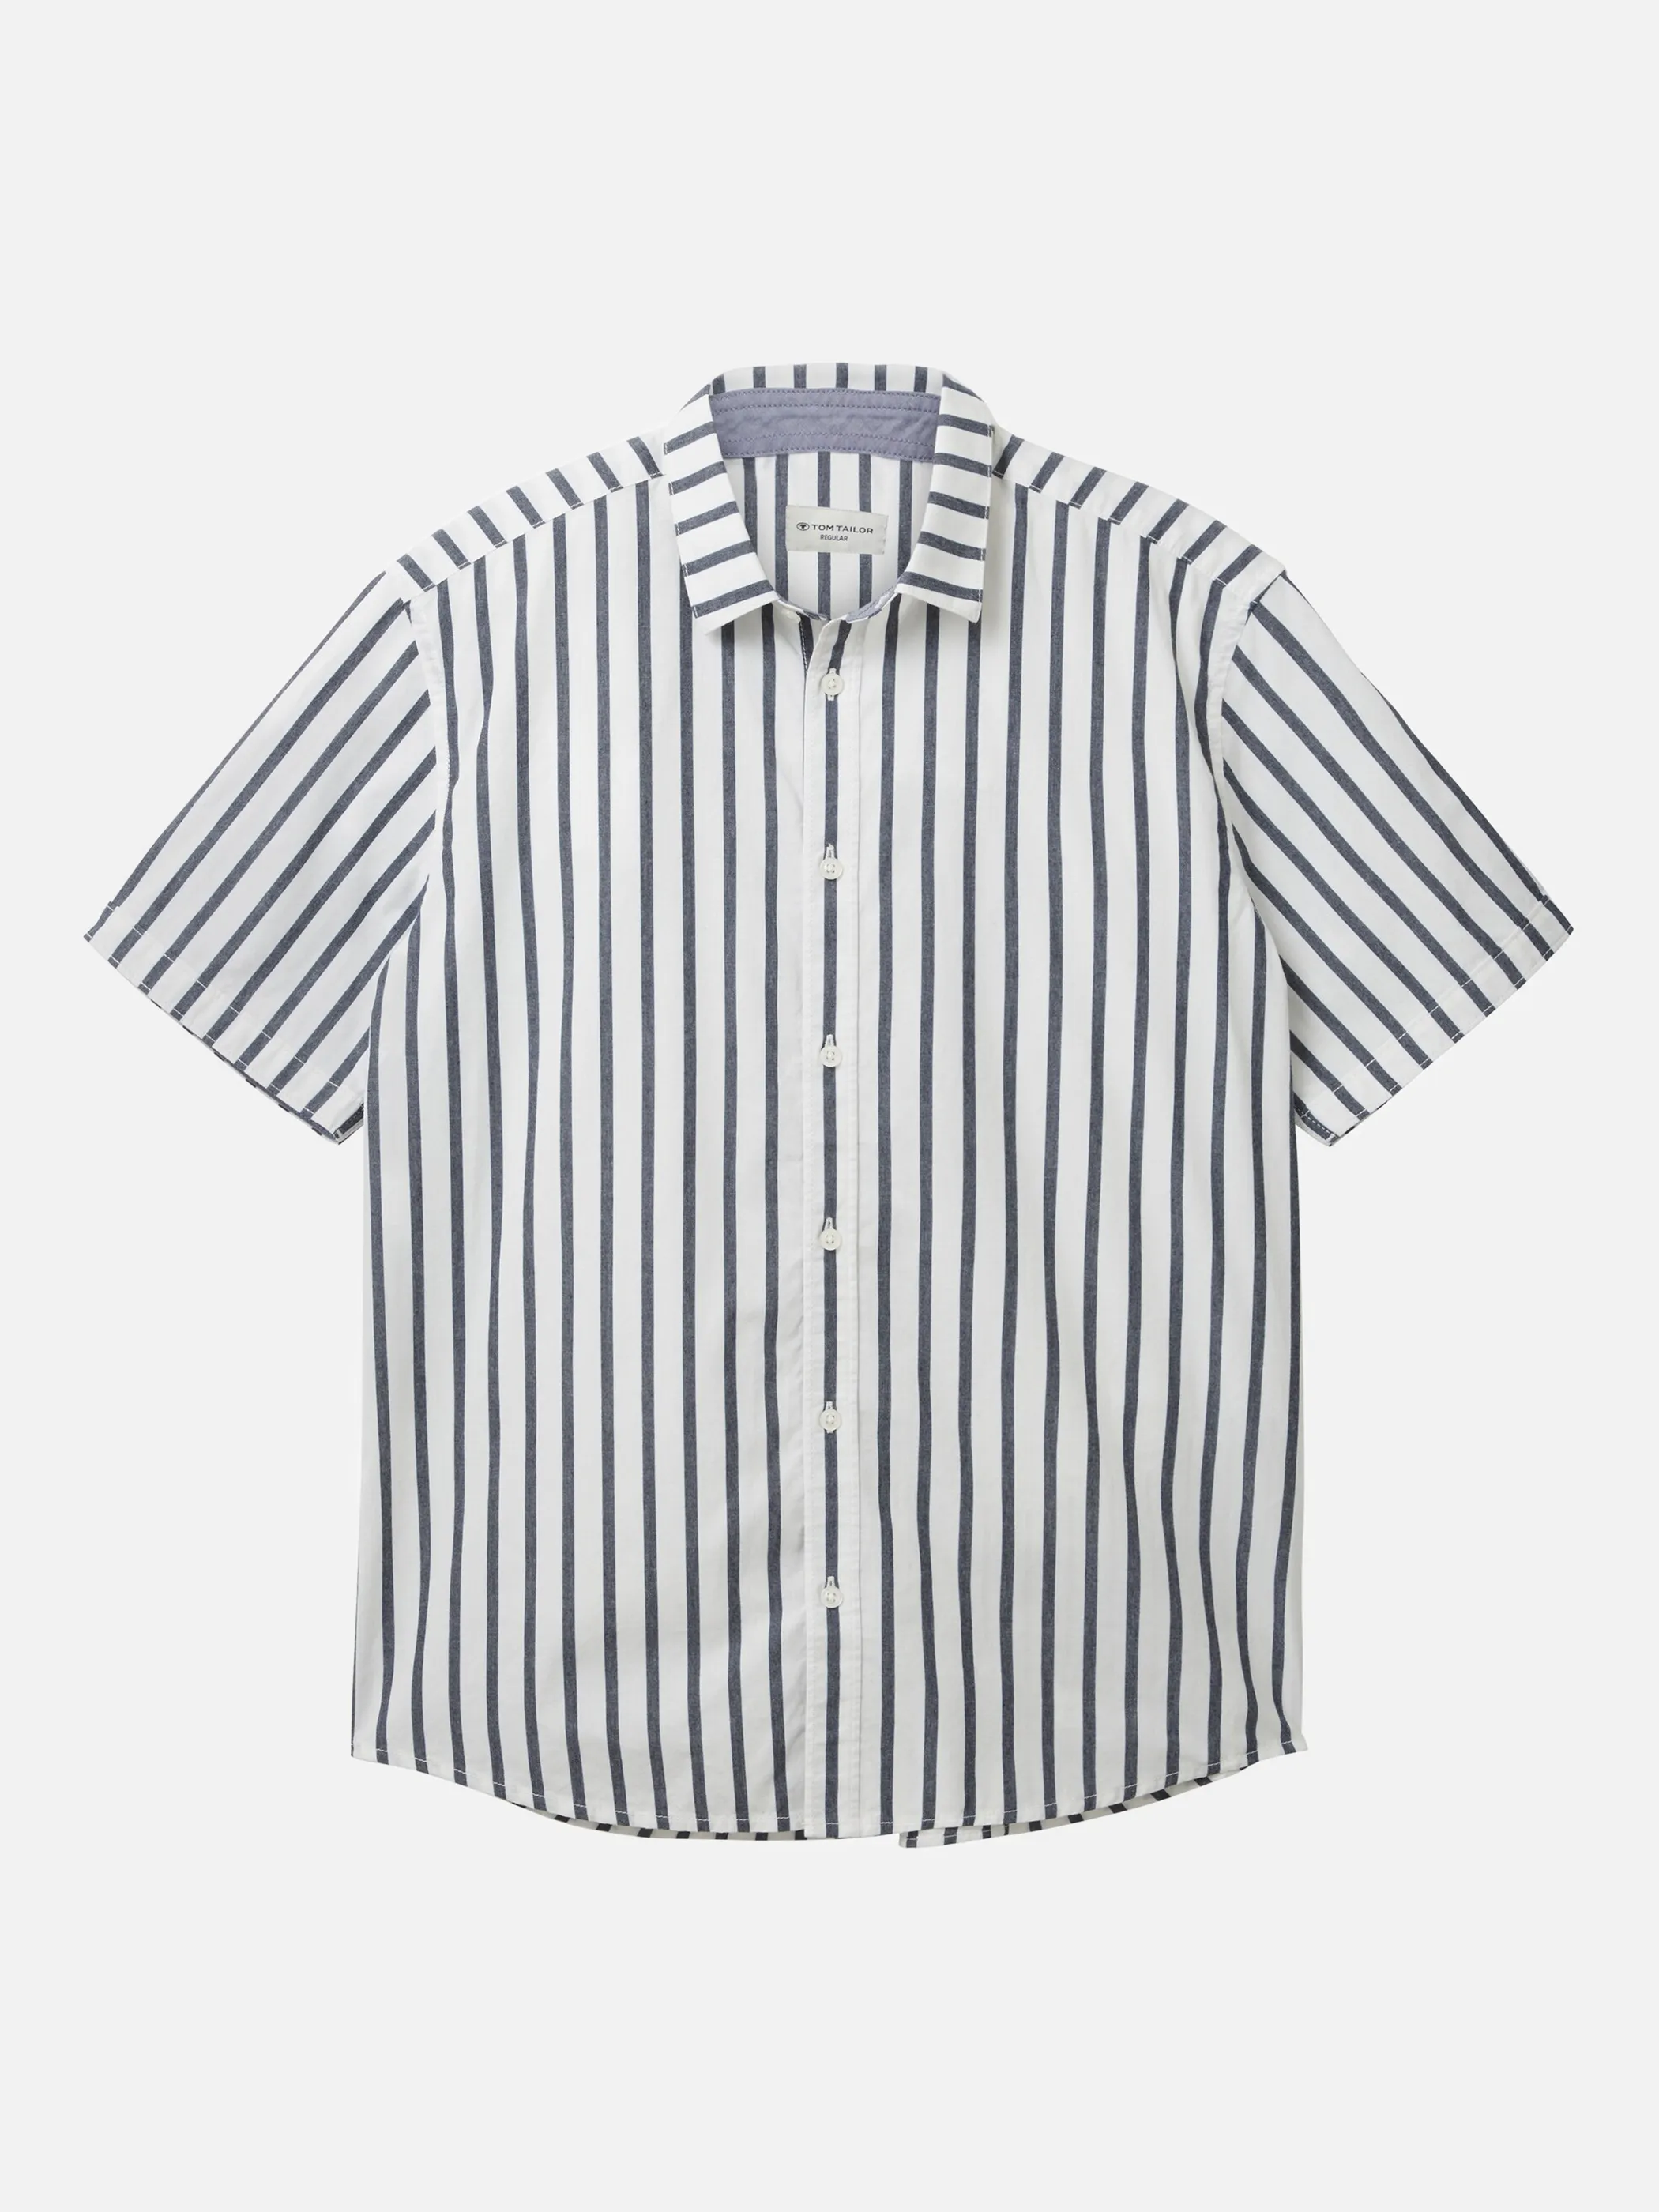 Tom Tailor 1037282 striped shirt Blau 880533 31785 1